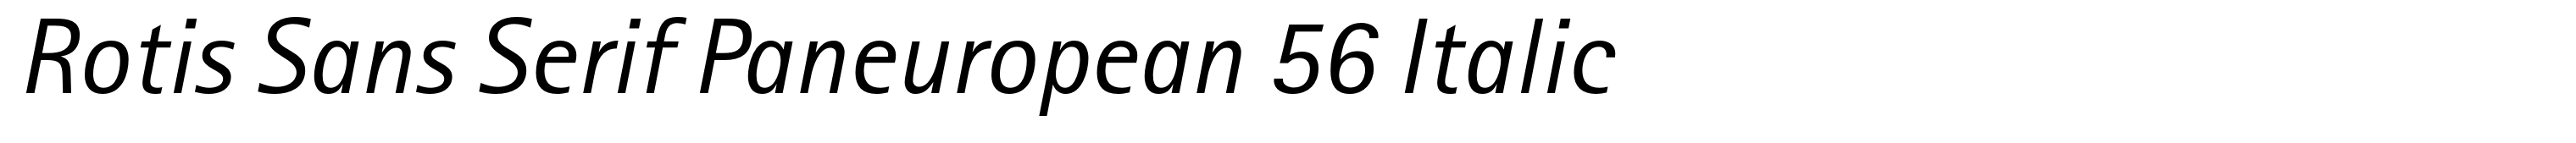 Rotis Sans Serif Paneuropean 56 Italic